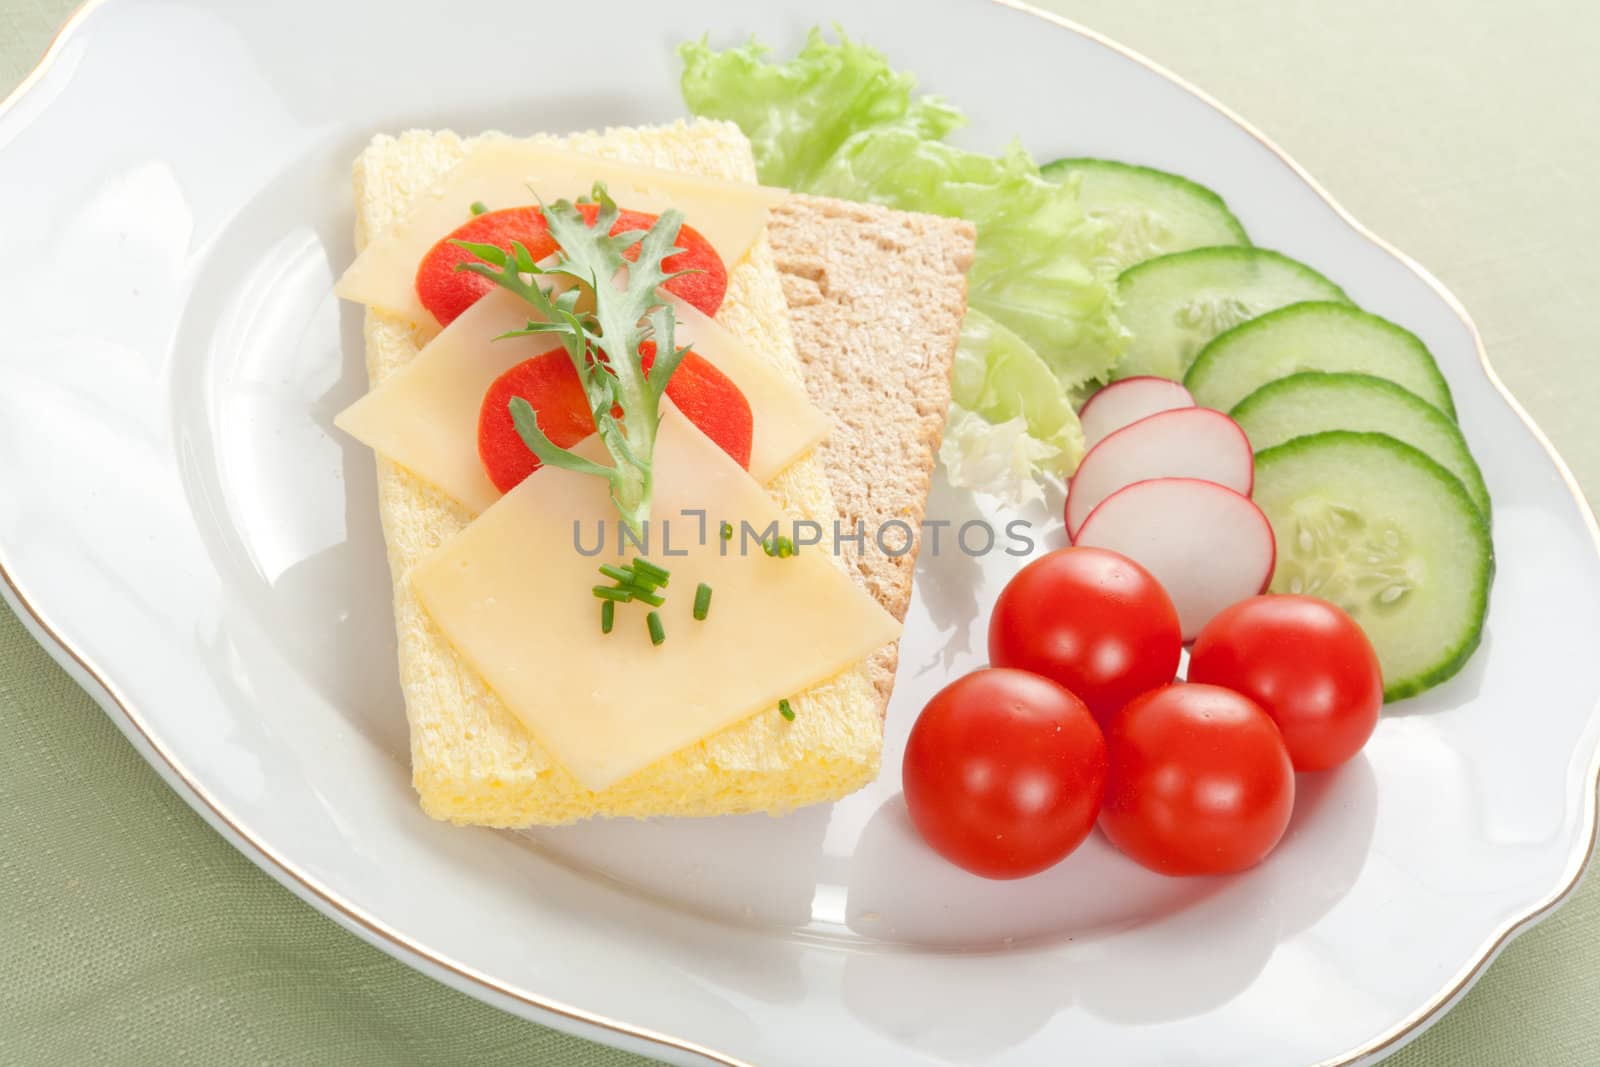 dietetic sandwich by aguirre_mar